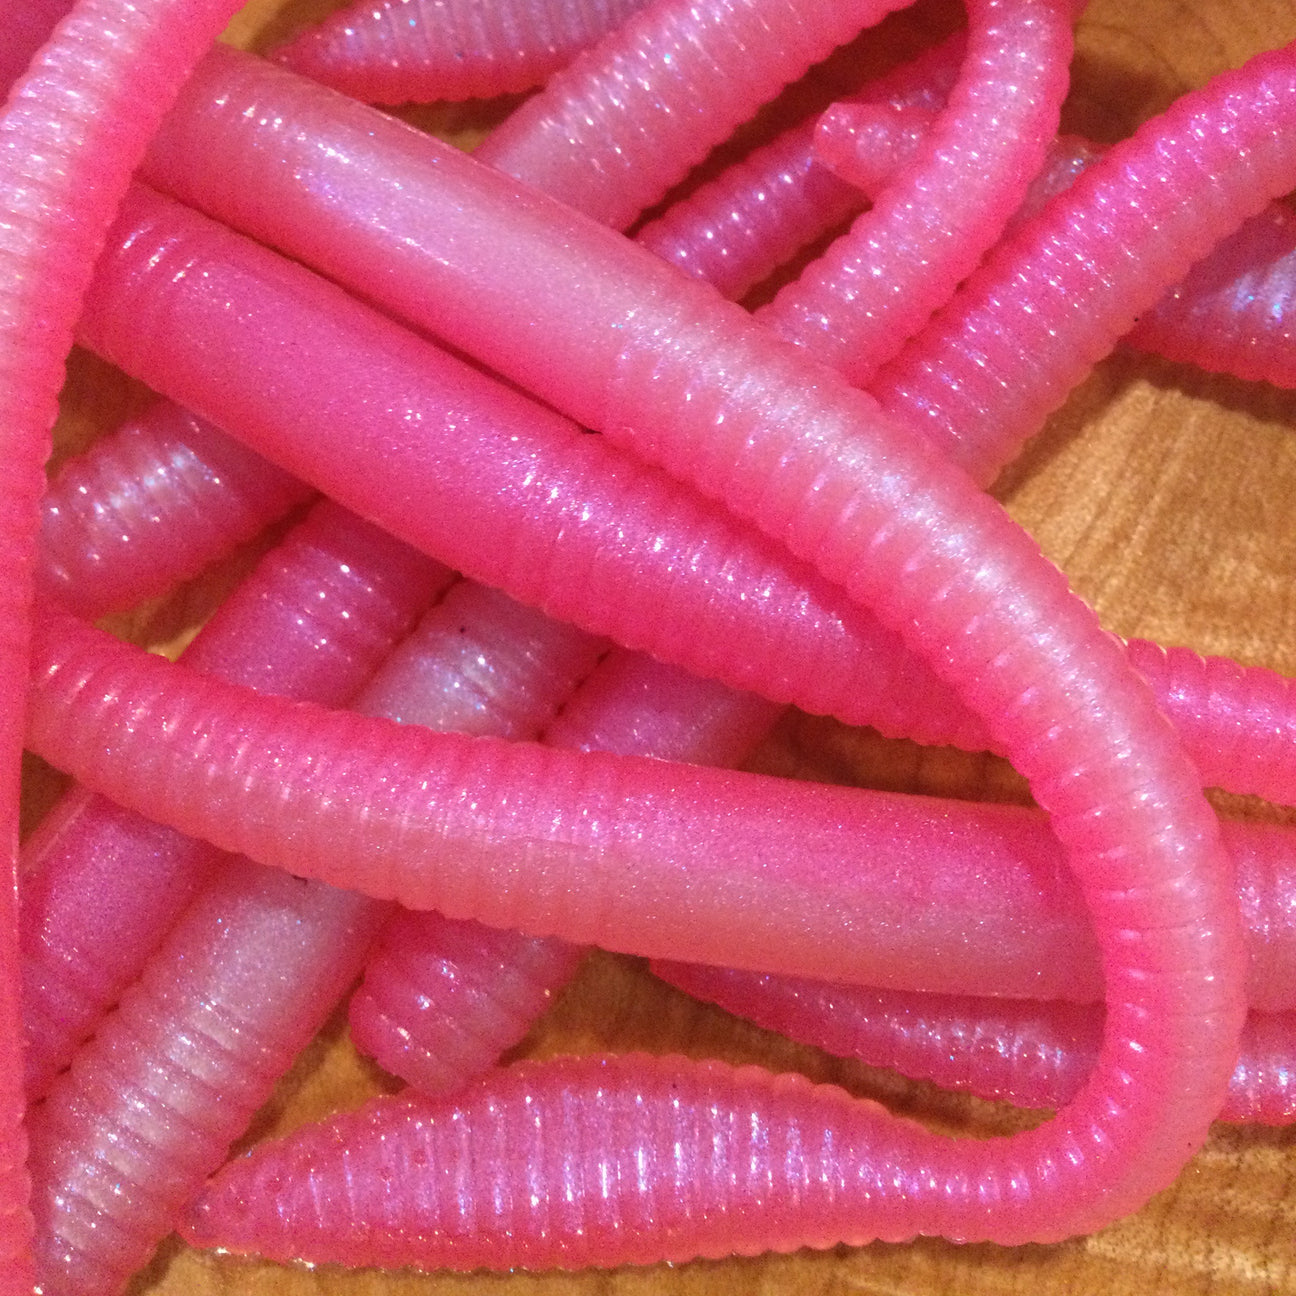 Bubble YUM- Viper Tail Worm